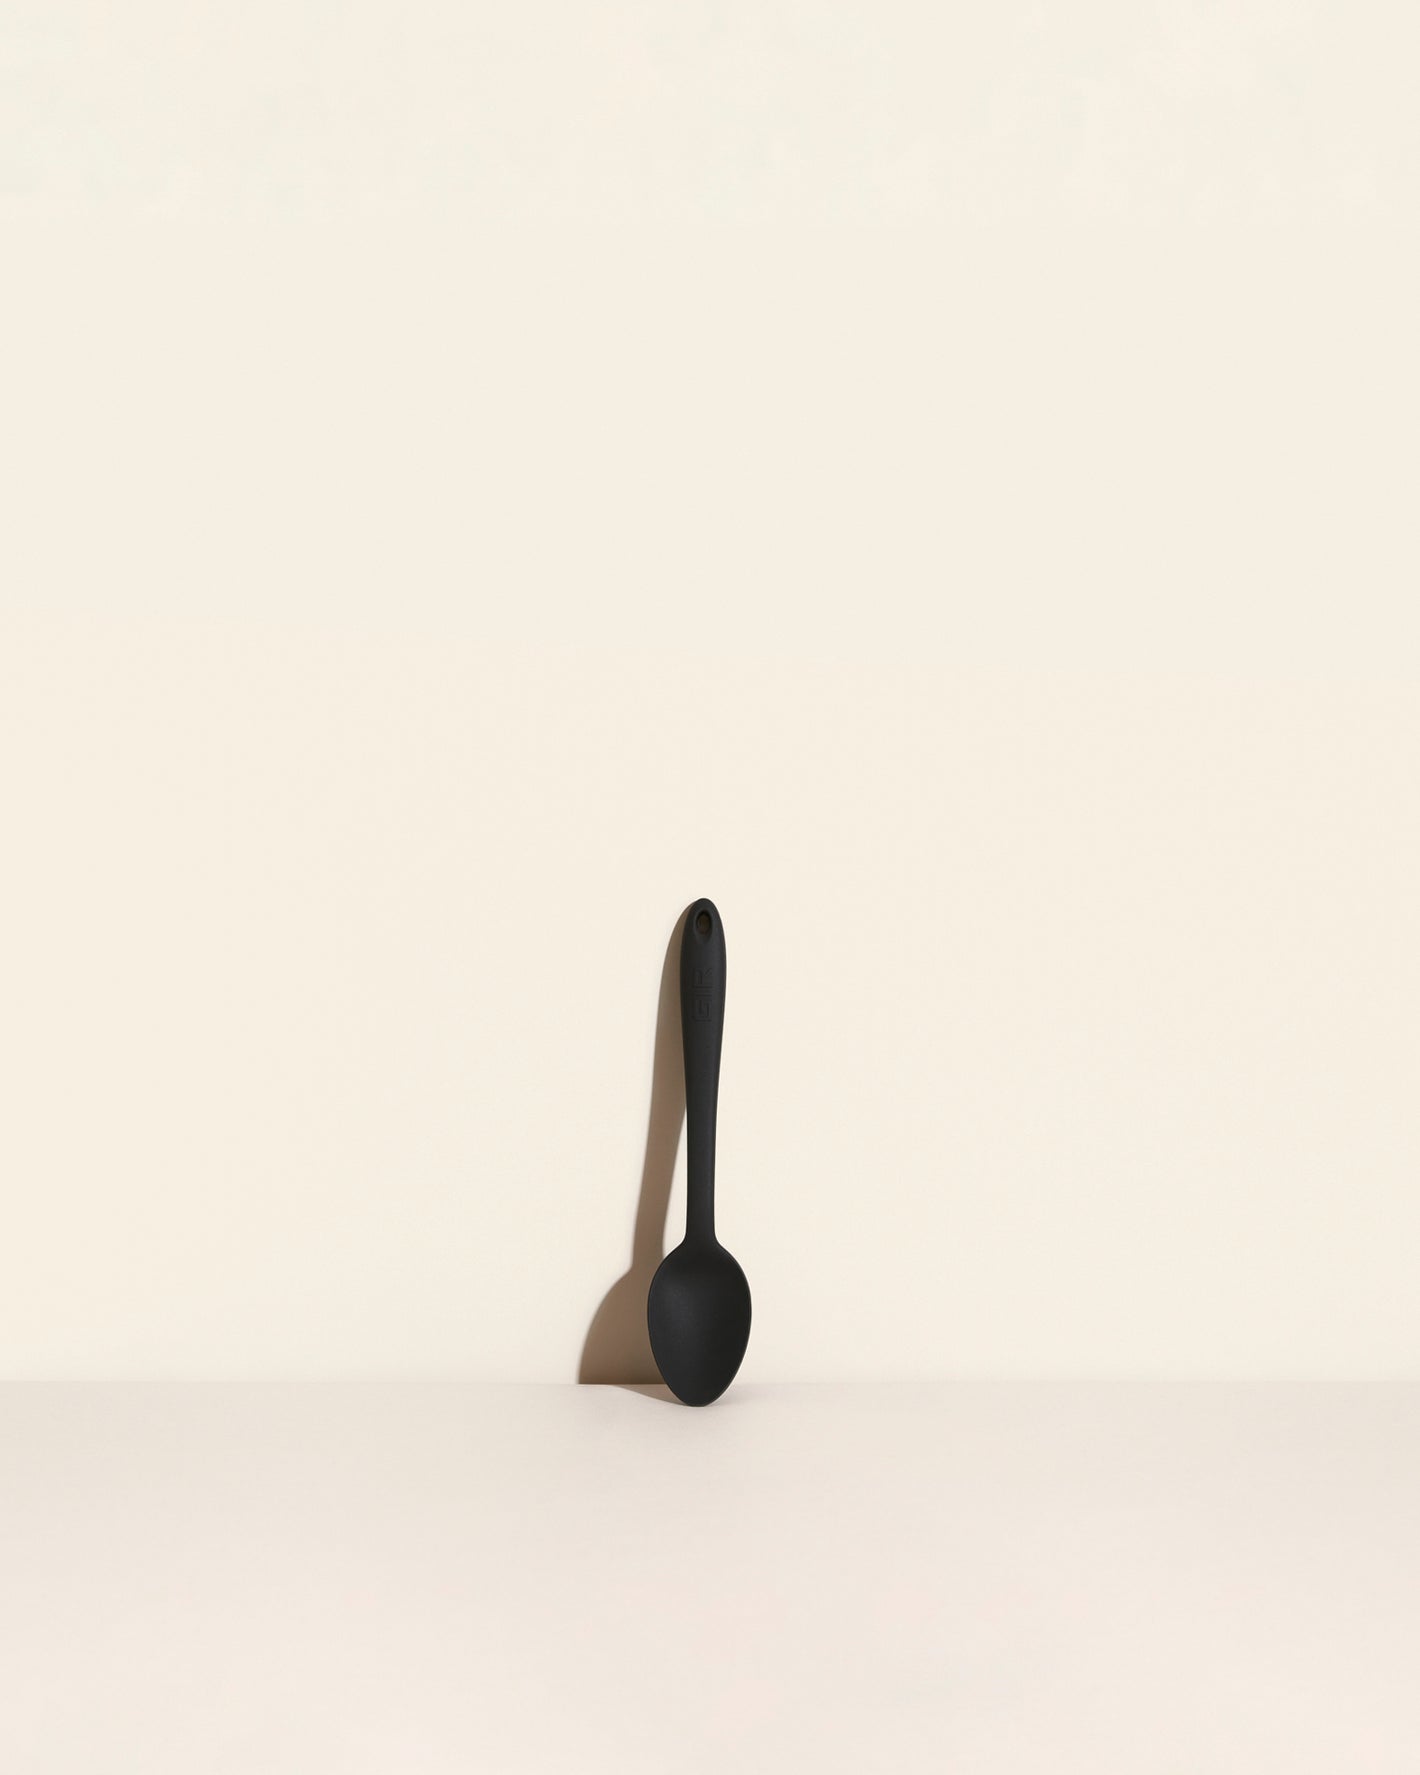 The Black Mini Spoon on a cream background. 